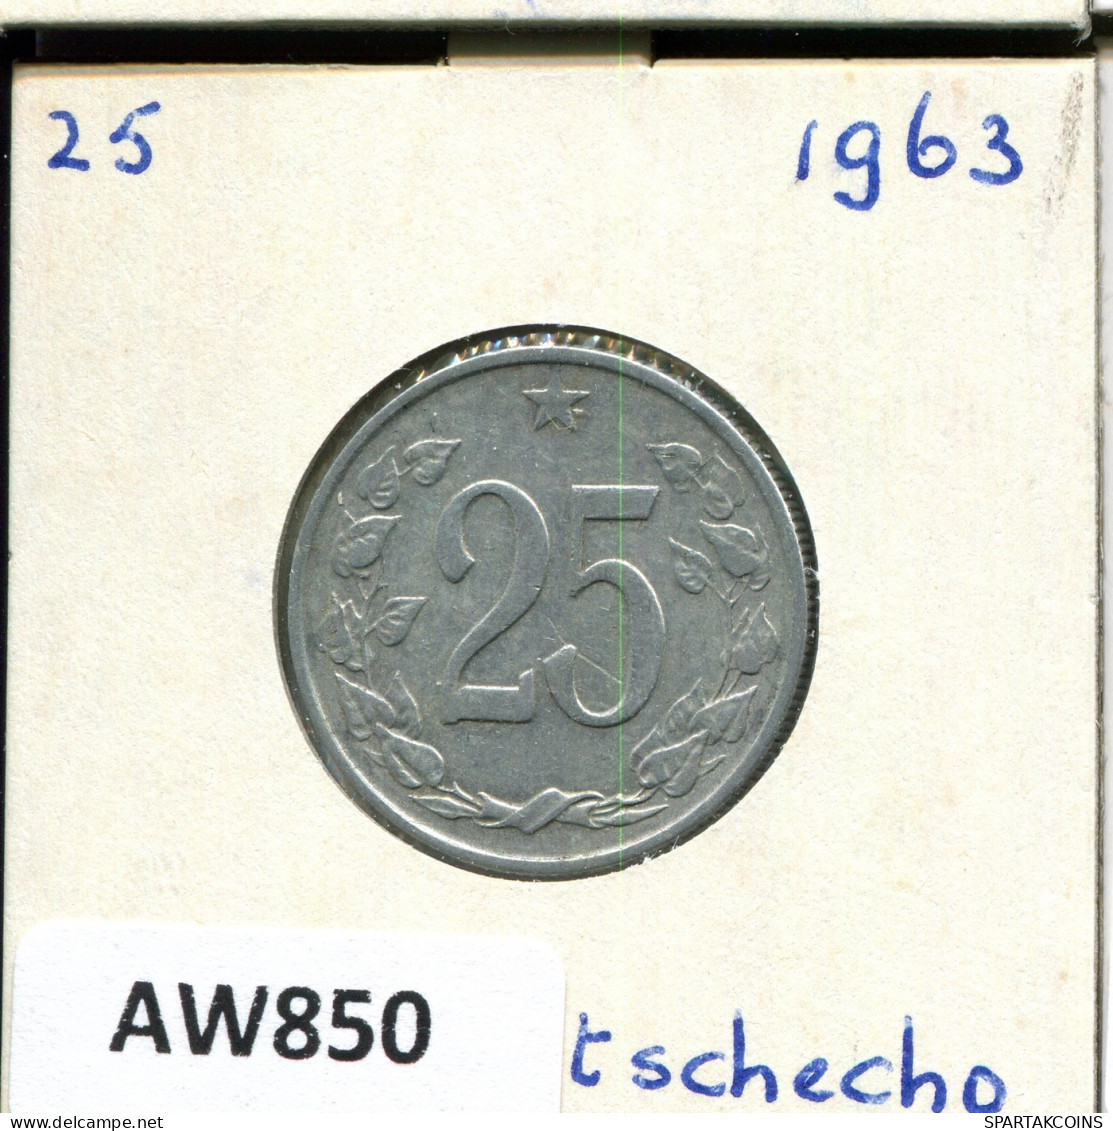 25 KORUN 1963 CZECHOSLOVAKIA Coin #AW850.U.A - Tschechoslowakei